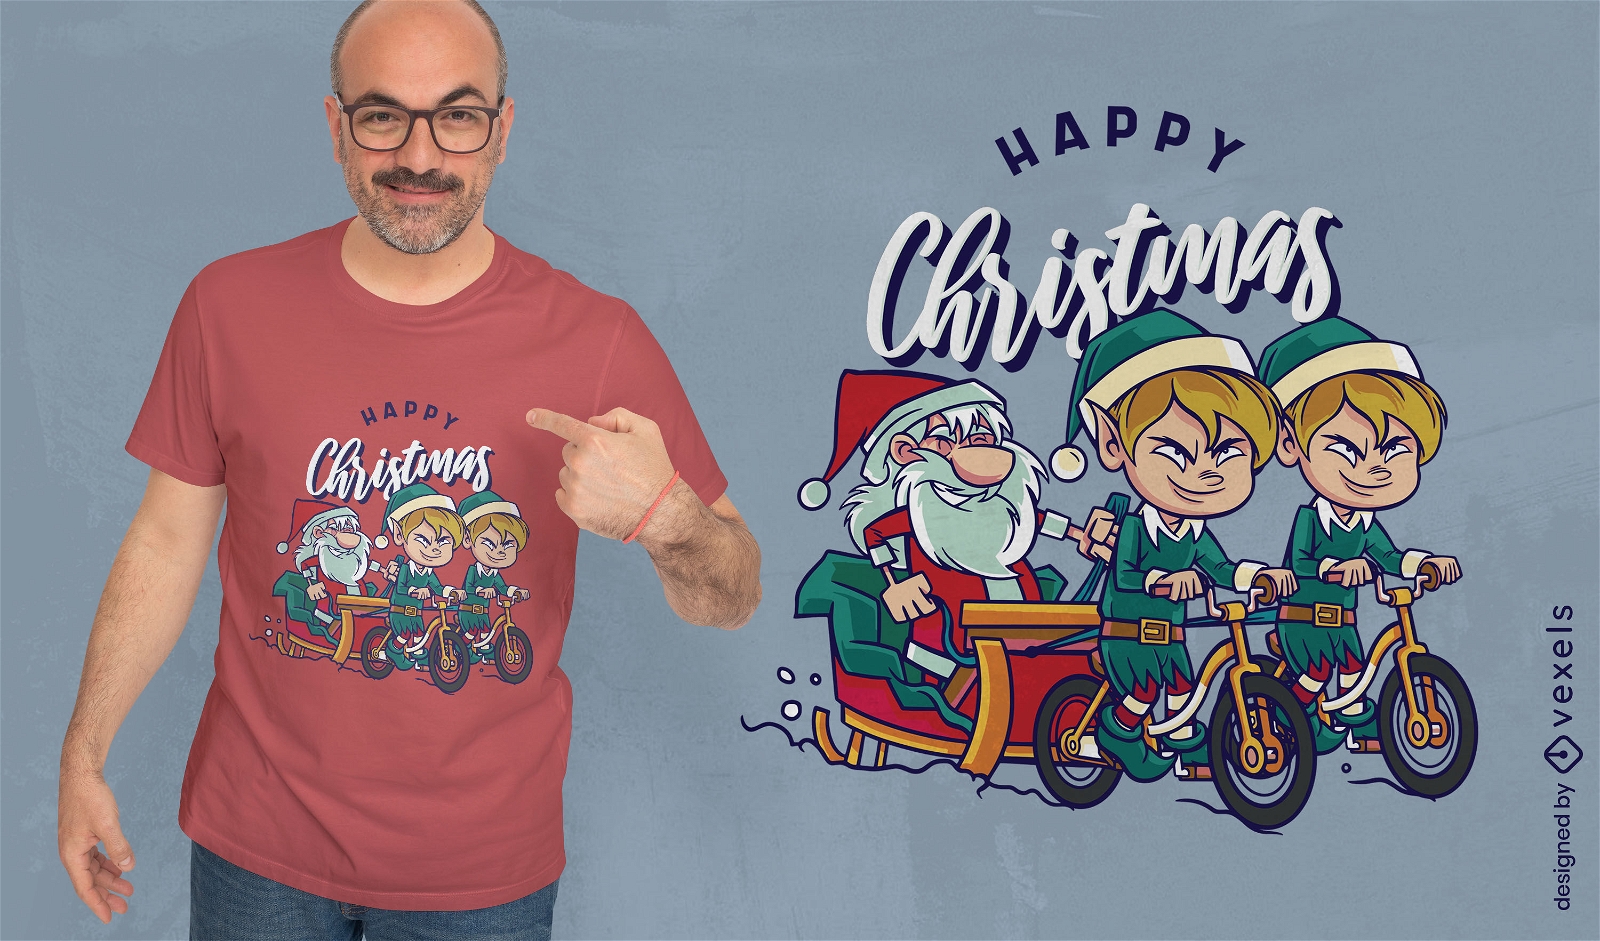 Happy Christmas Santa and elves t-shirt design